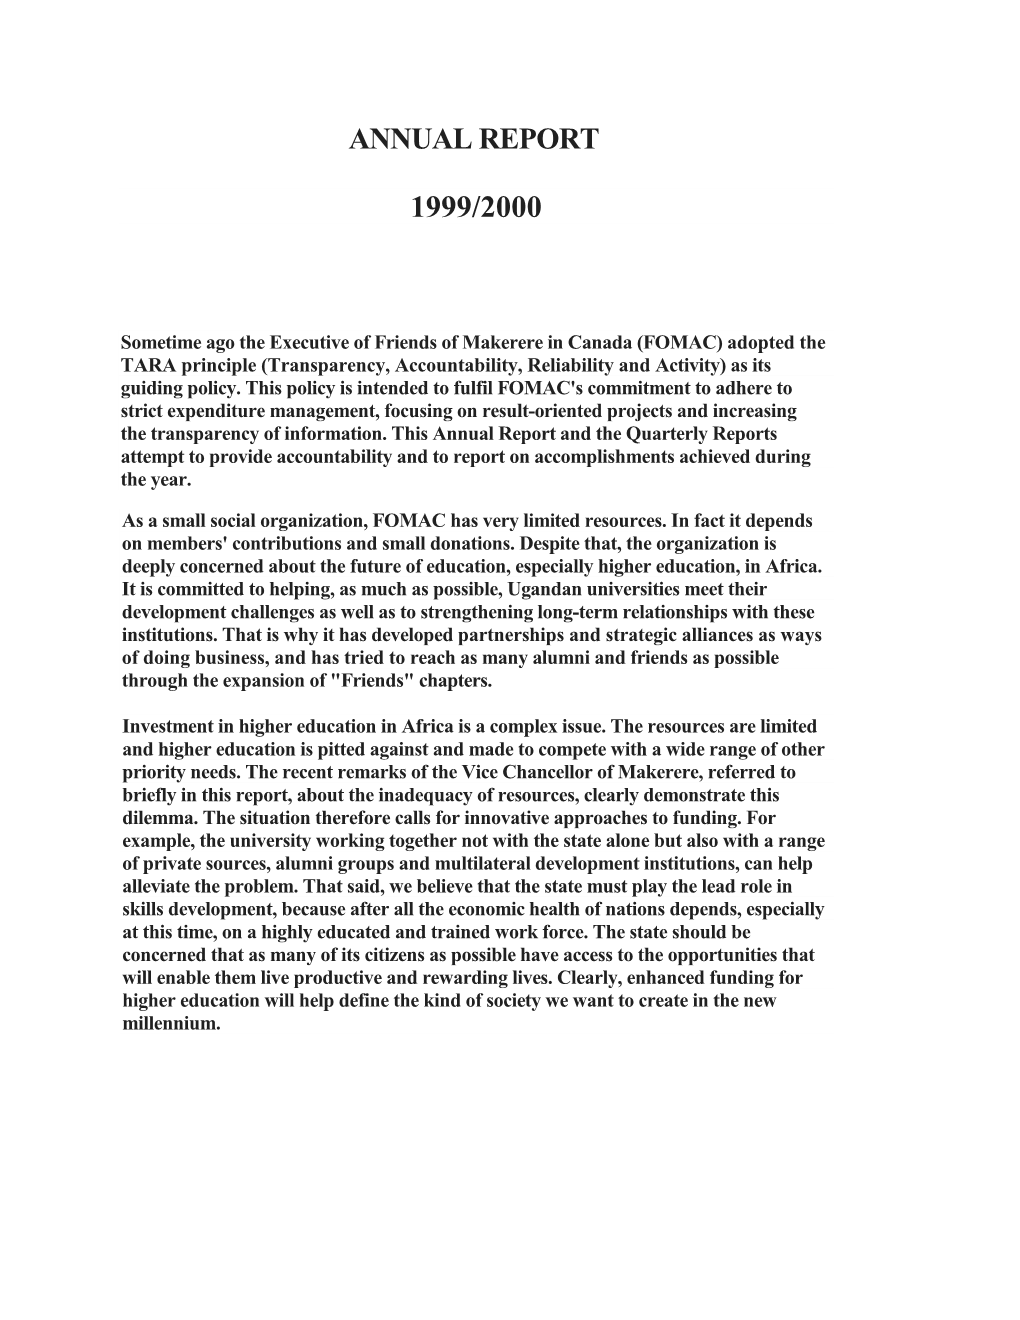 Annual Report 1999/2000